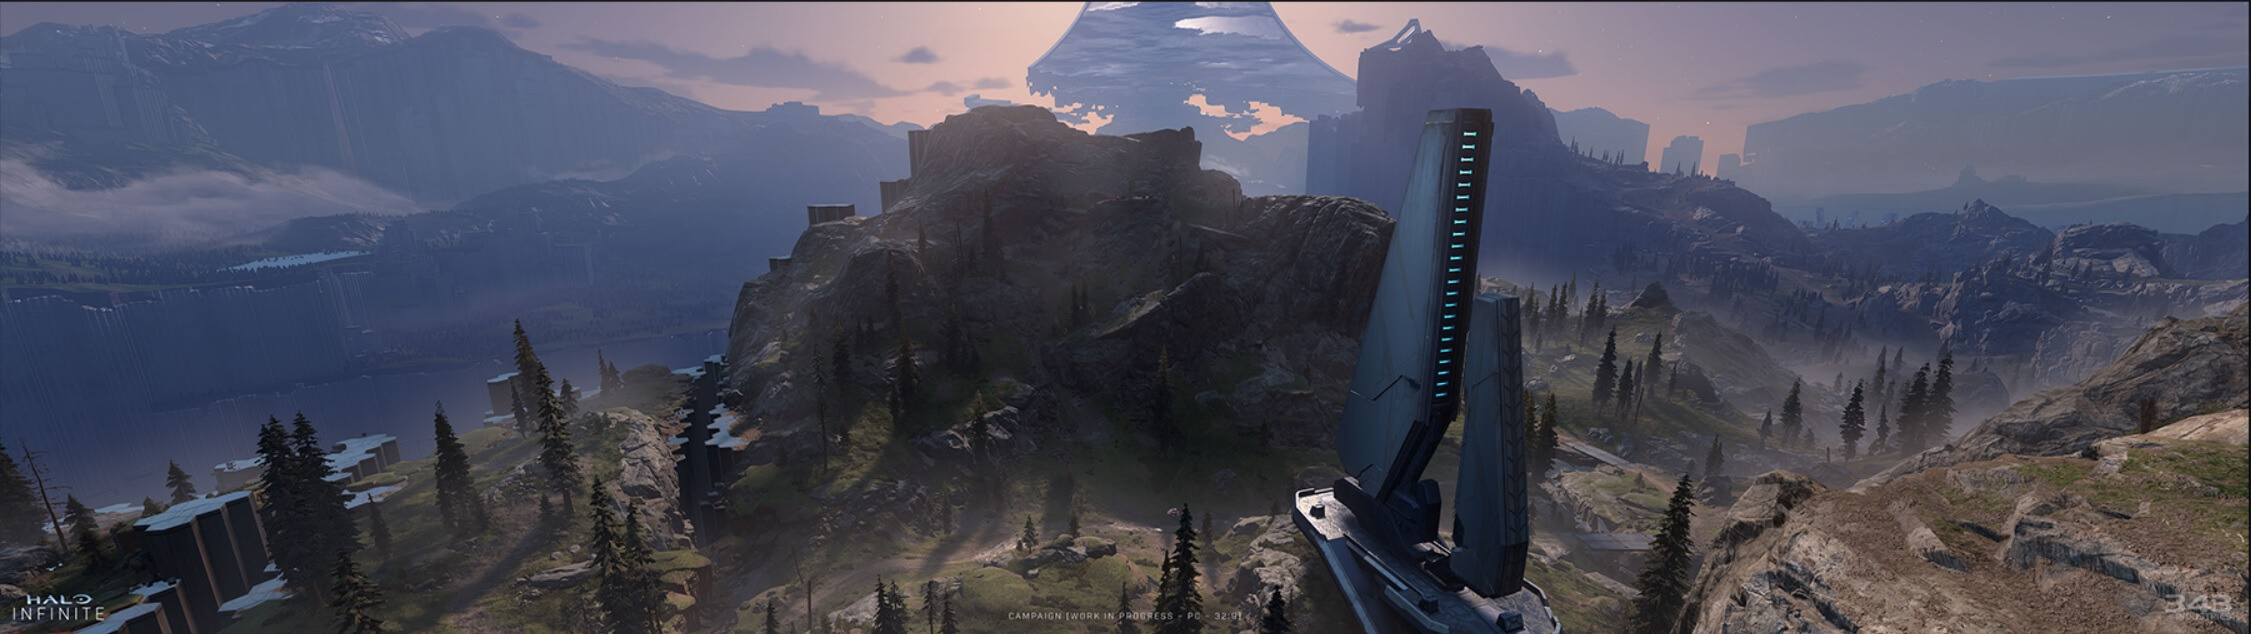 Halo-Infinite-PC-screenshots-April-2021-1.jpg